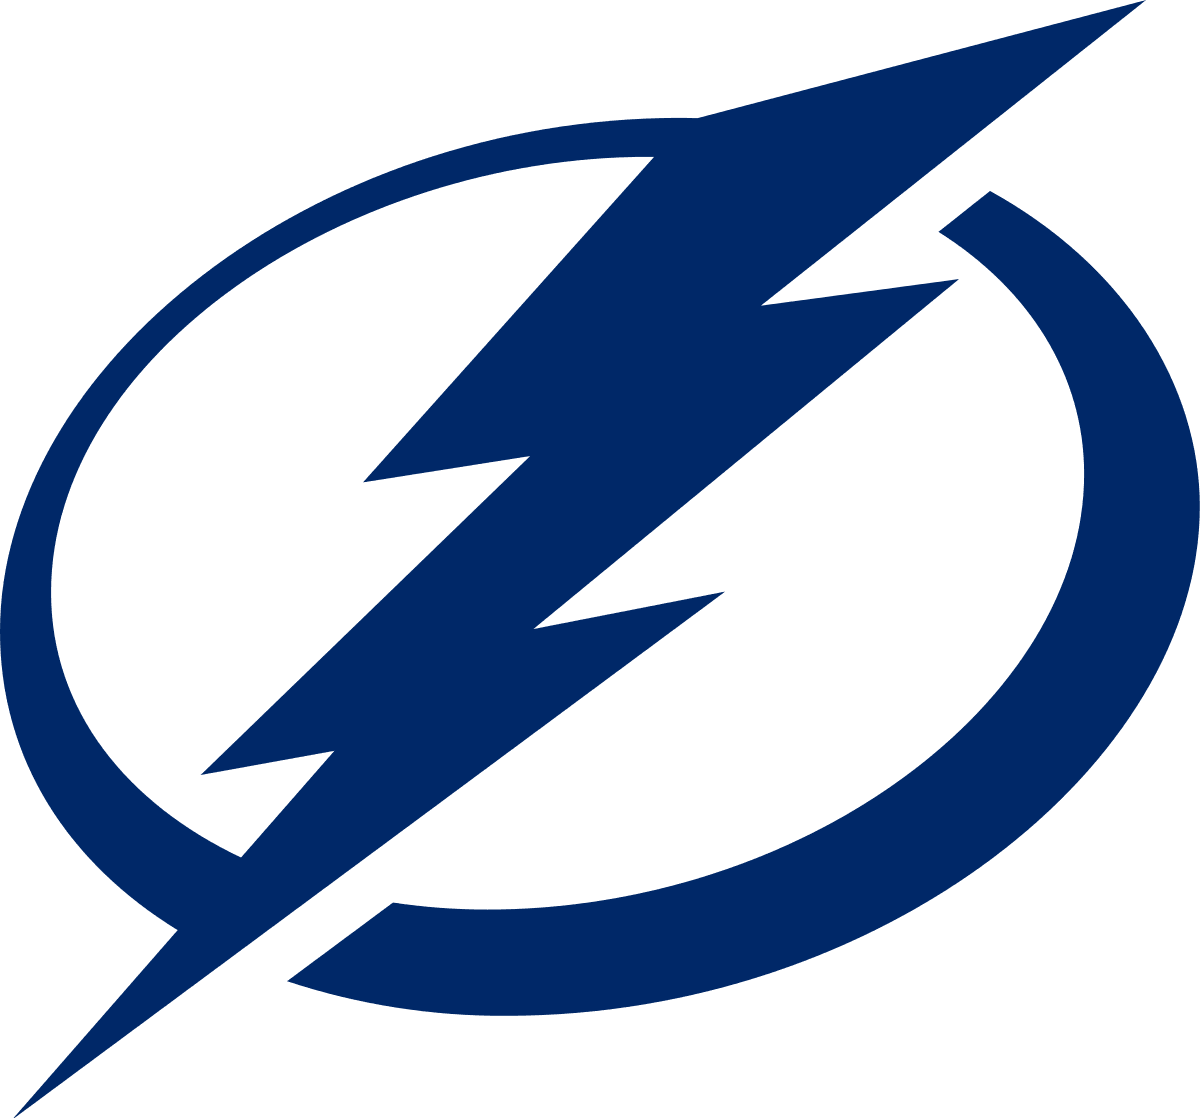 Tampa Bay Lightning vs. Washington Capitals